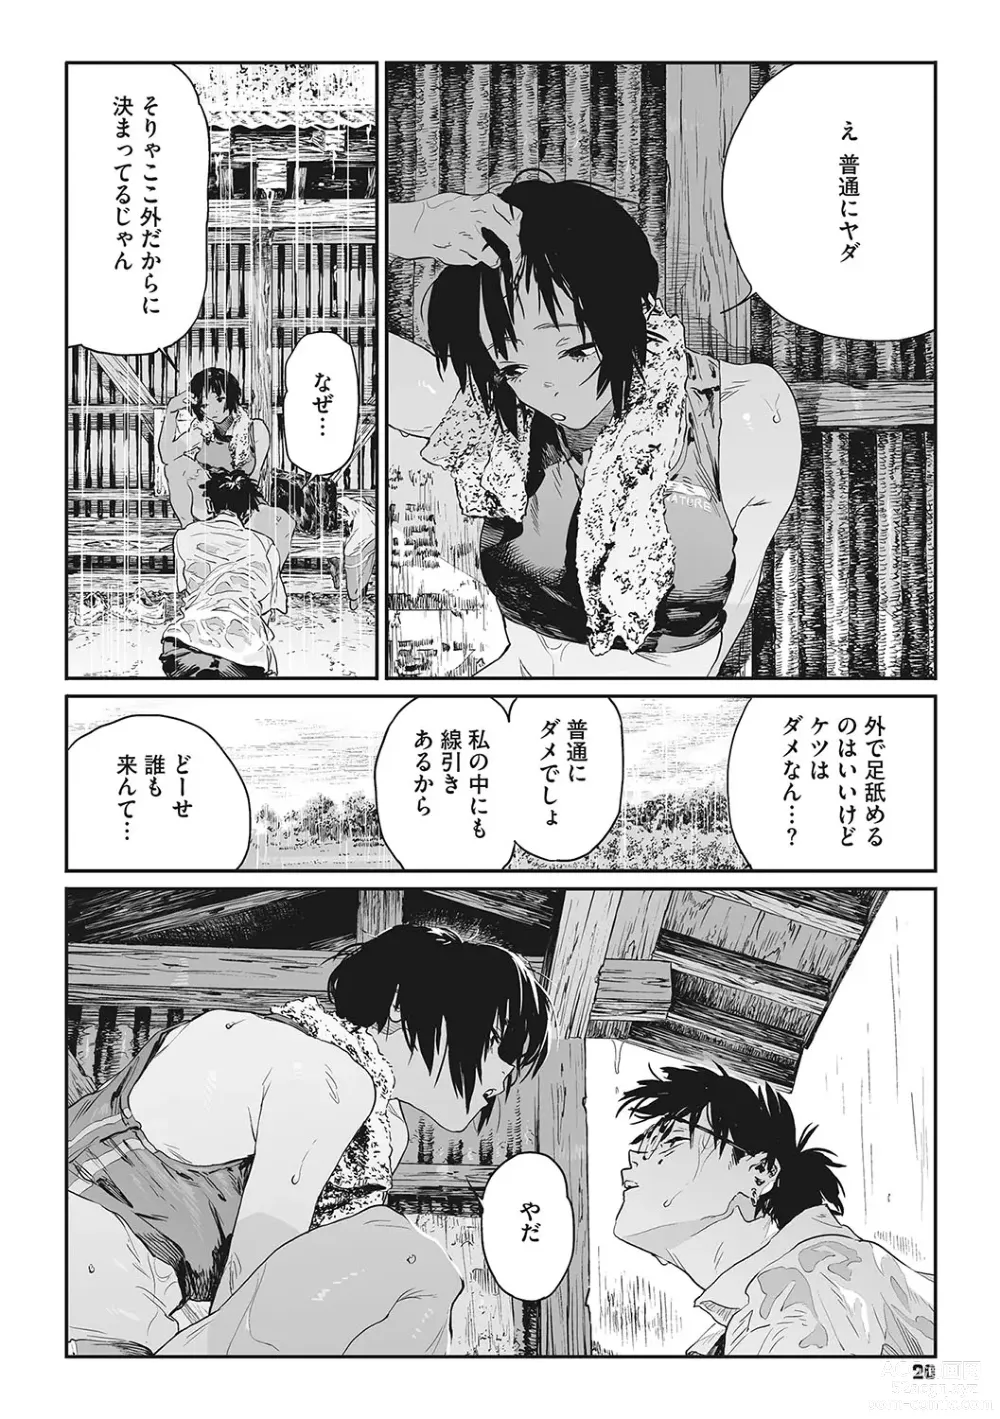 Page 19 of manga Ito o Yoru